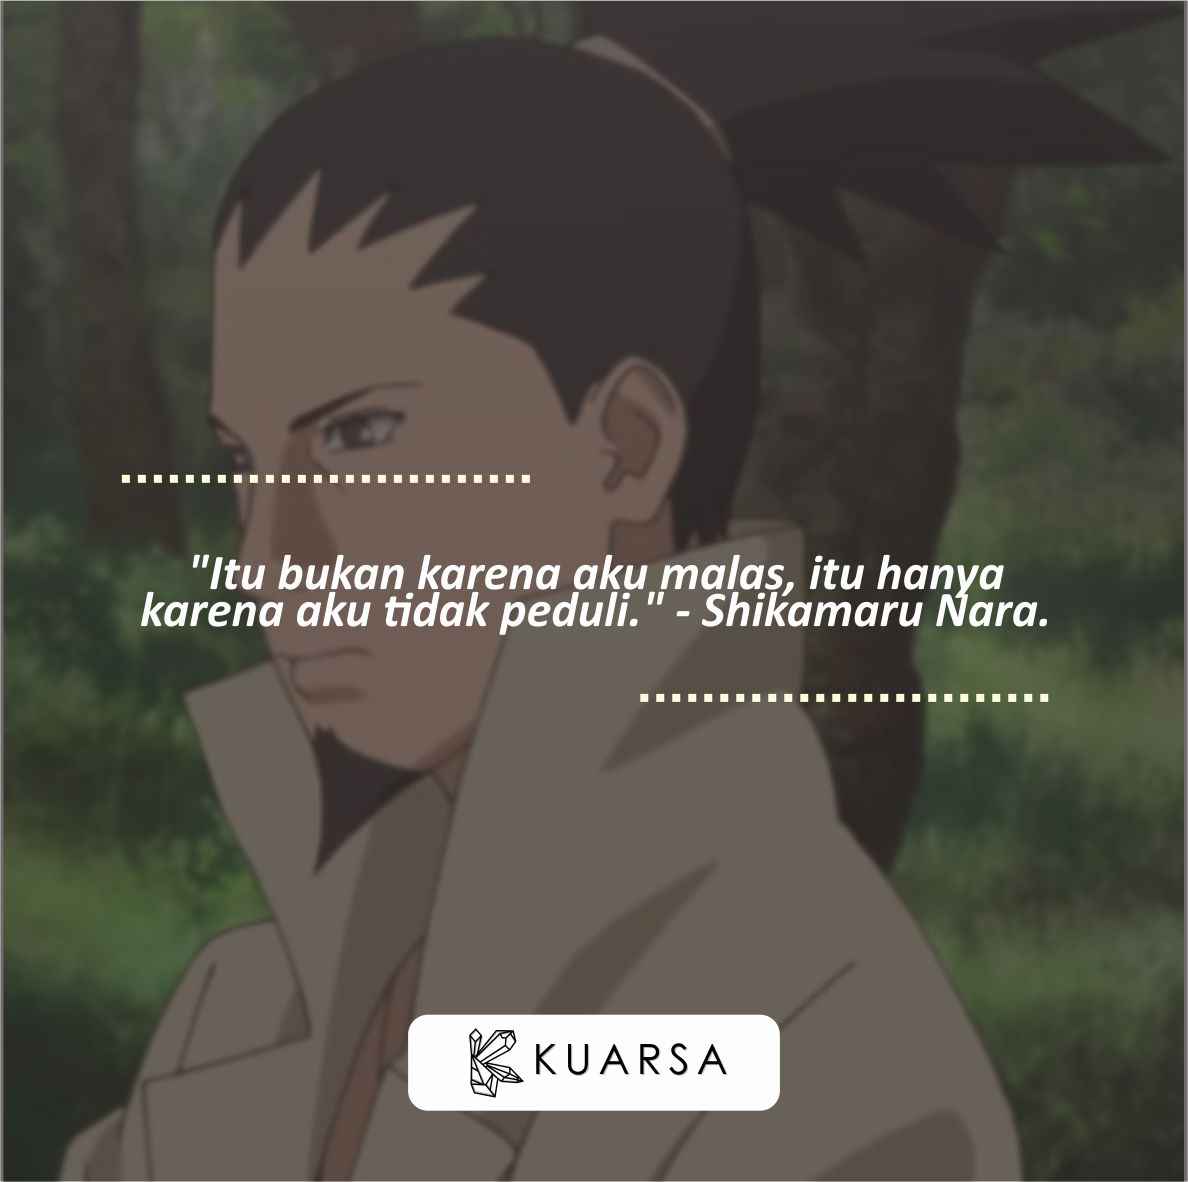 26 Quotes Shikamaru Nara, Kutipan Gambar Aesthetic